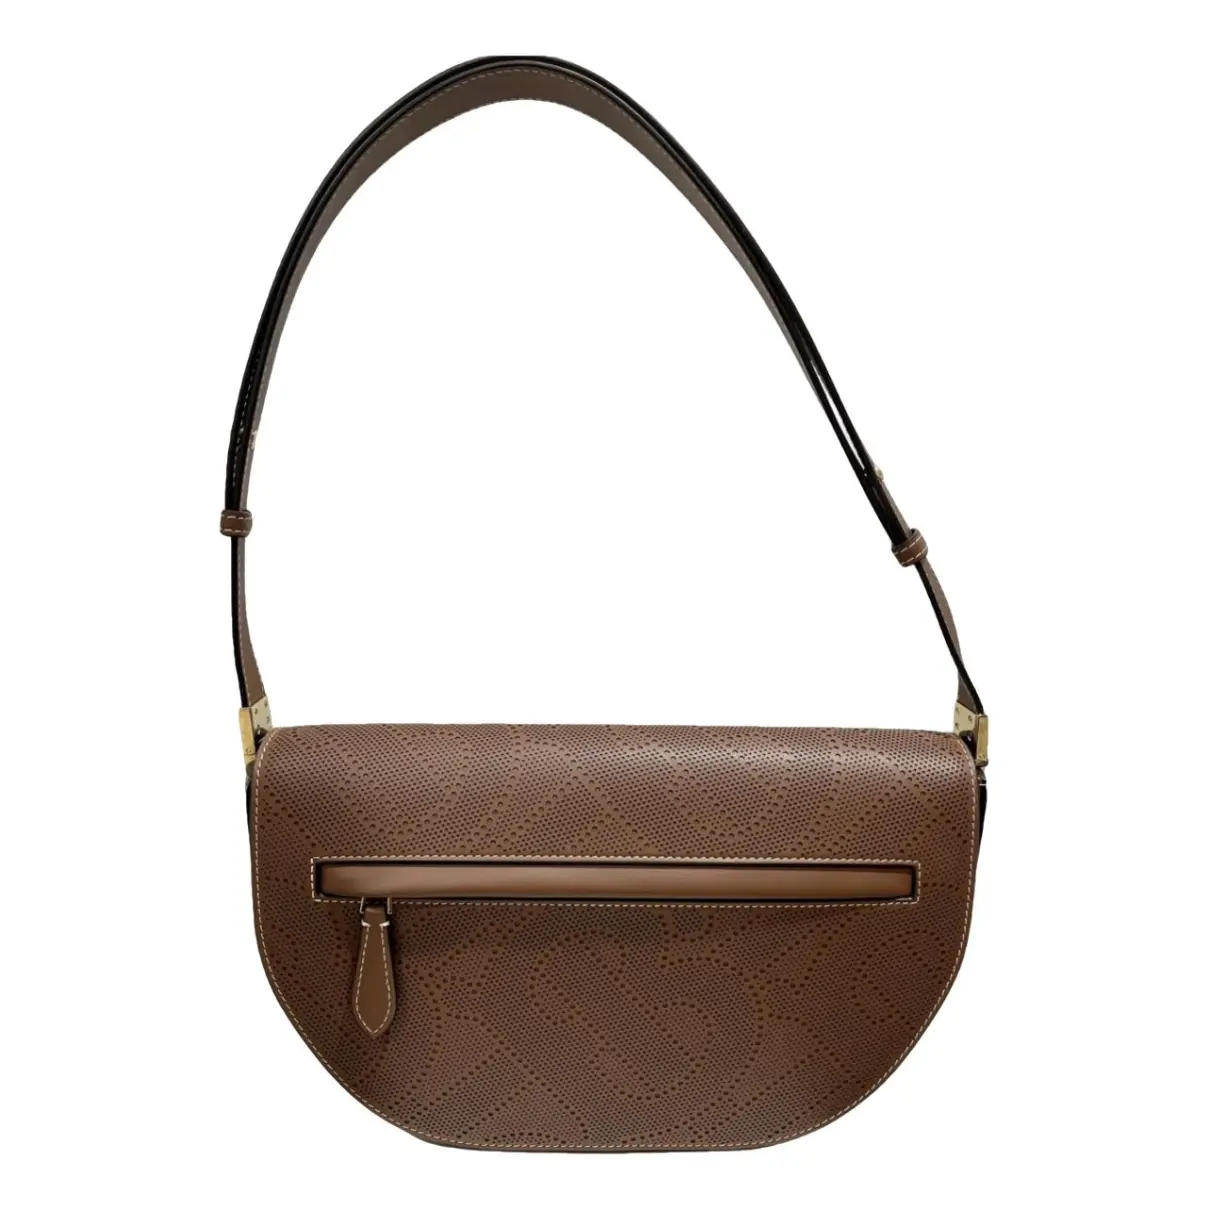 Olympia leather handbag